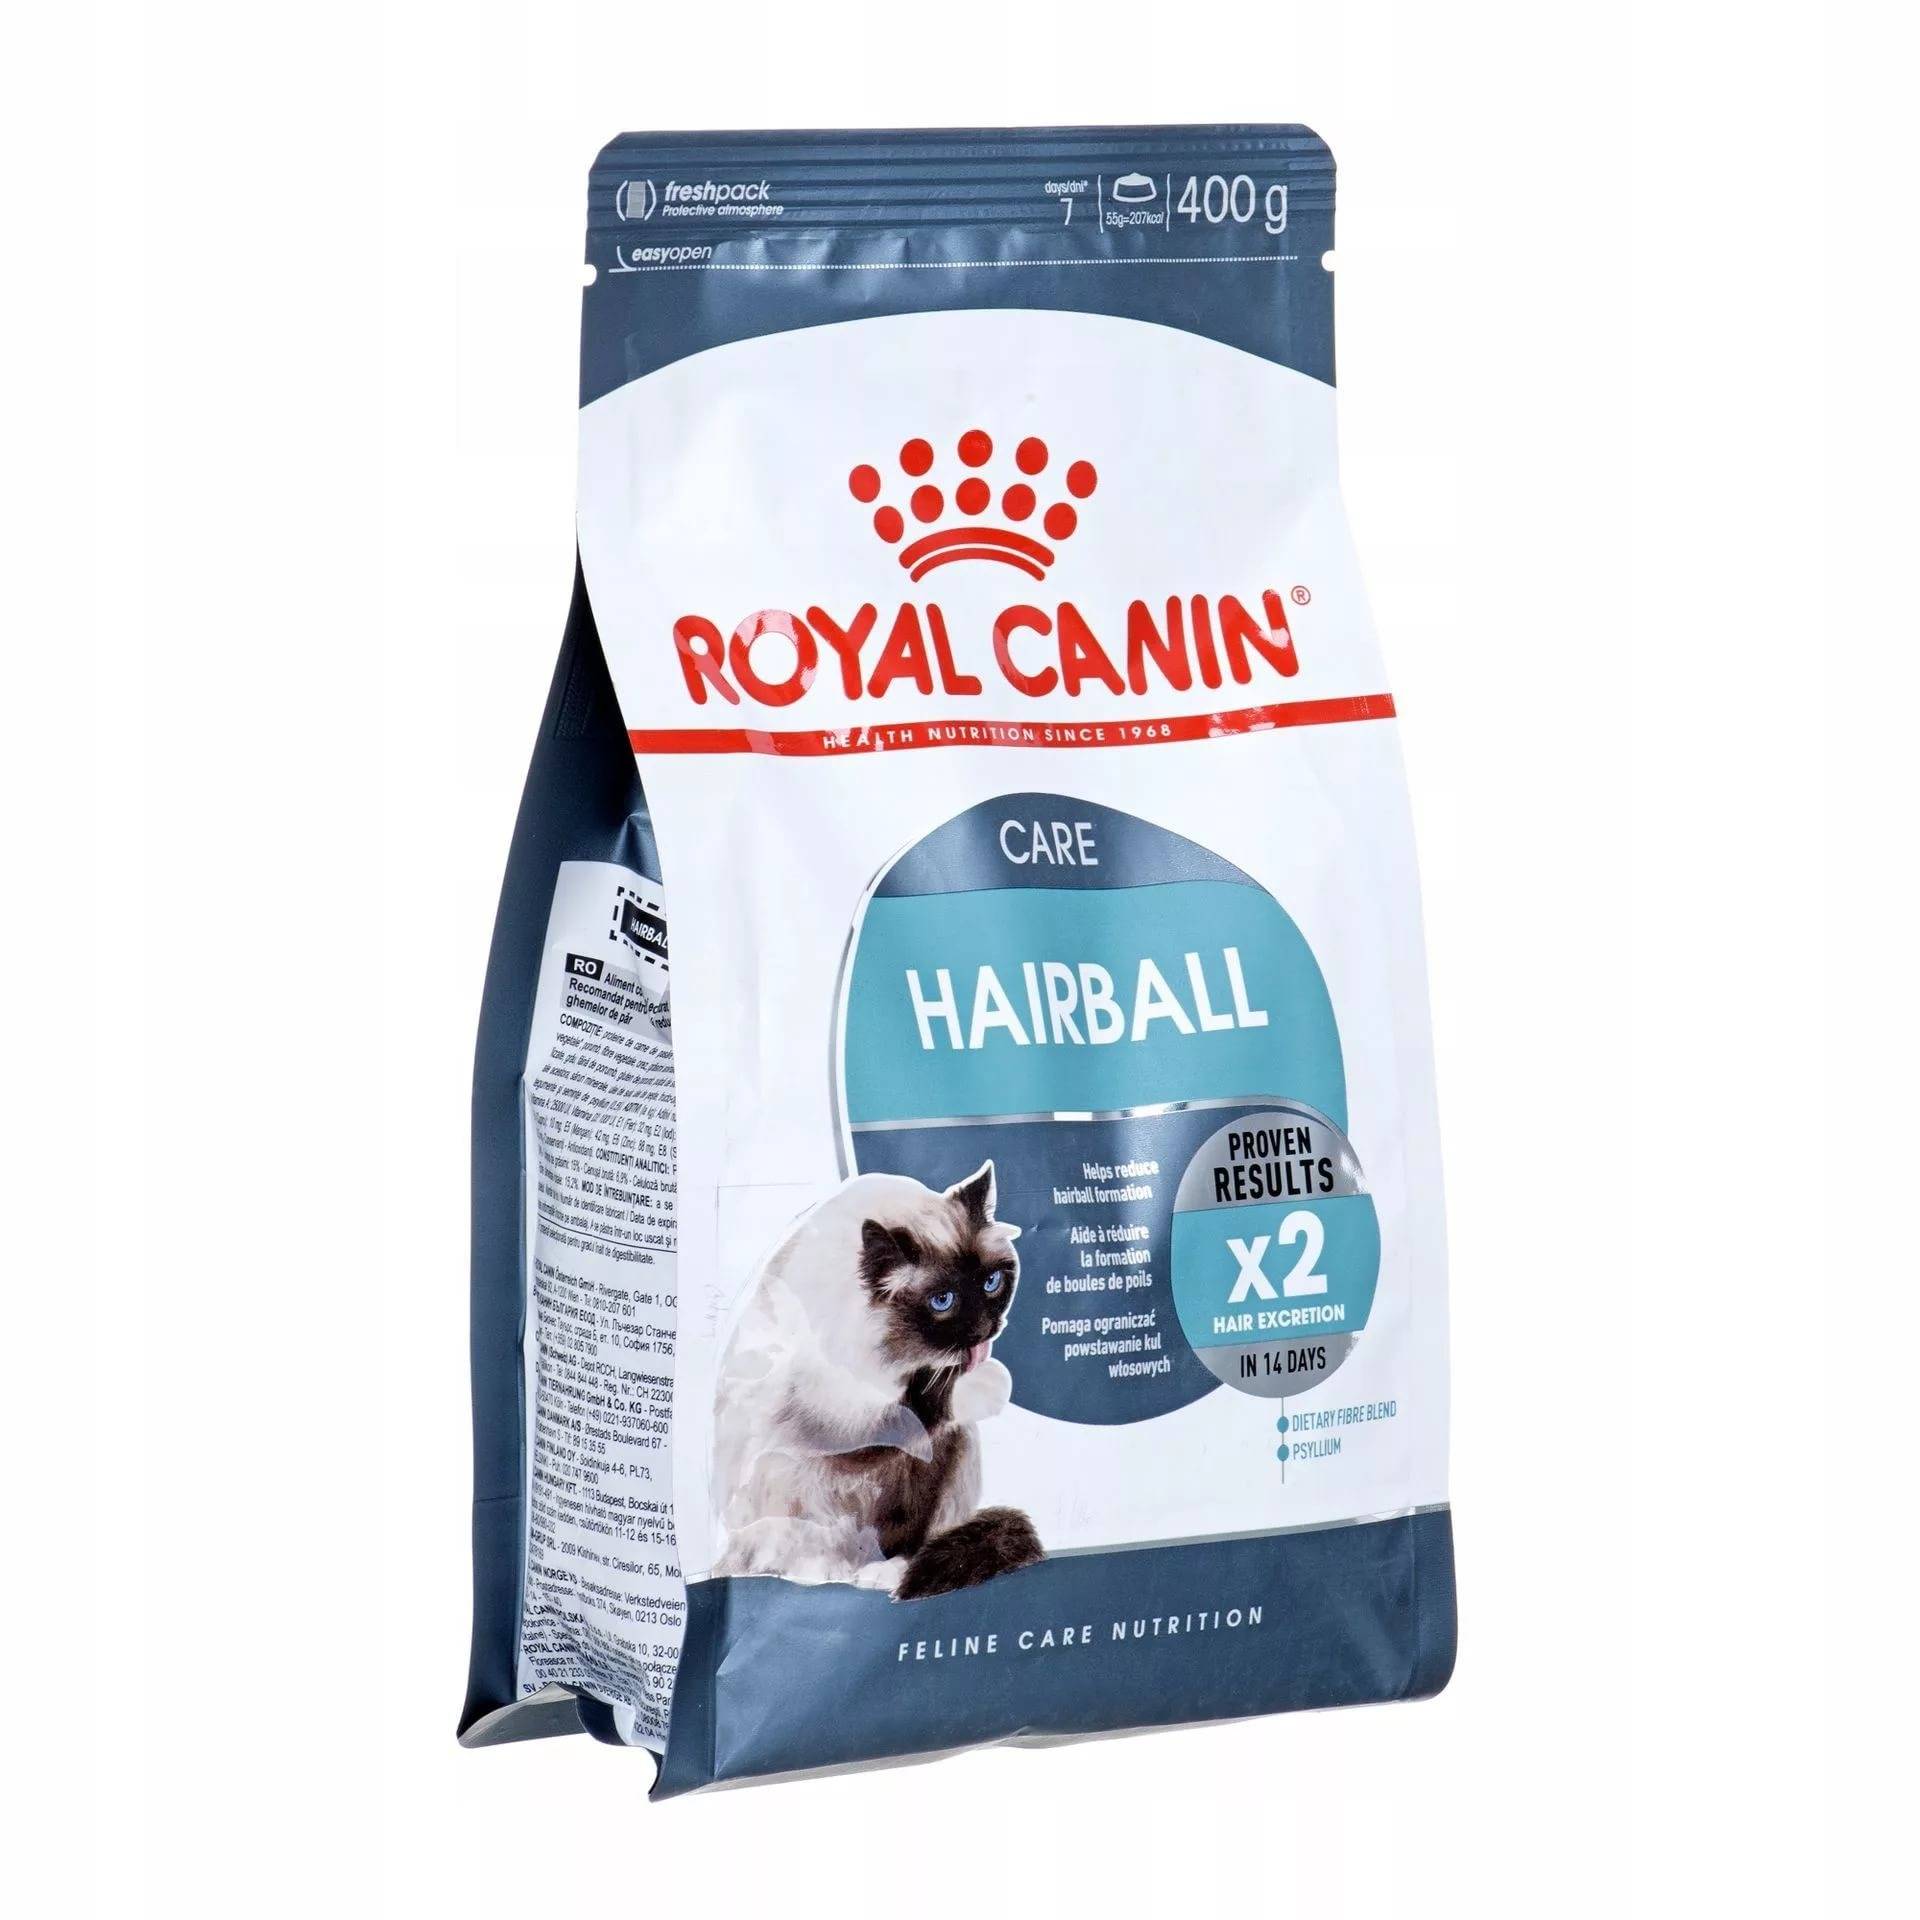 Royal Canin Hairball Care д/кош